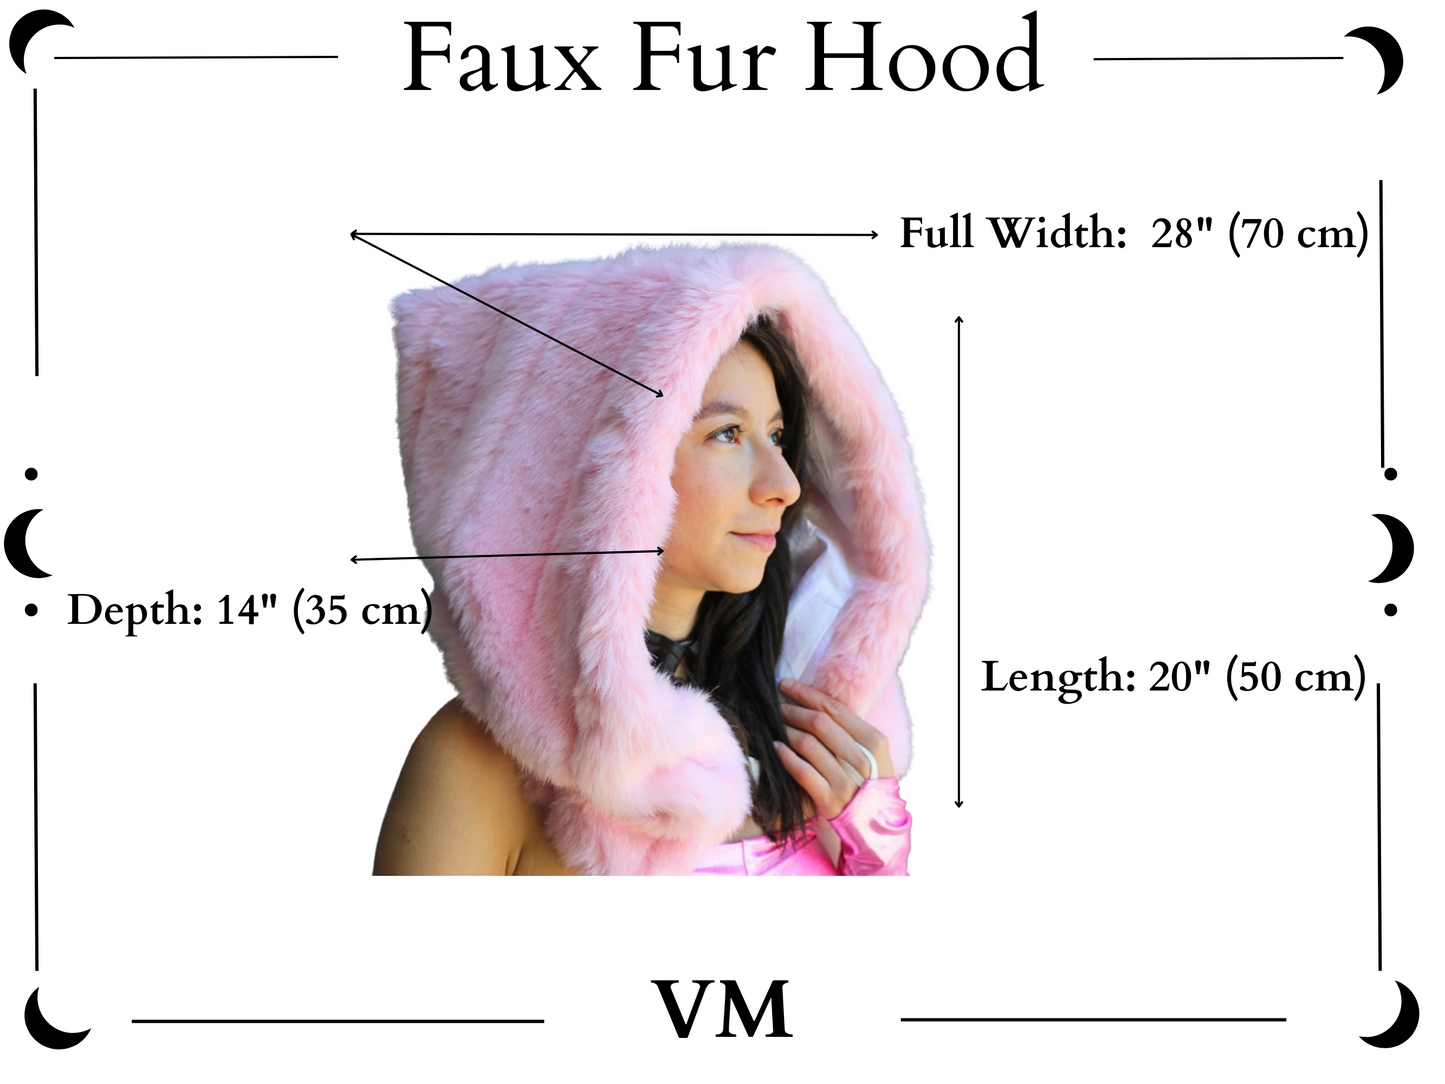 The VM Festival Hood with Faux Fur Trim